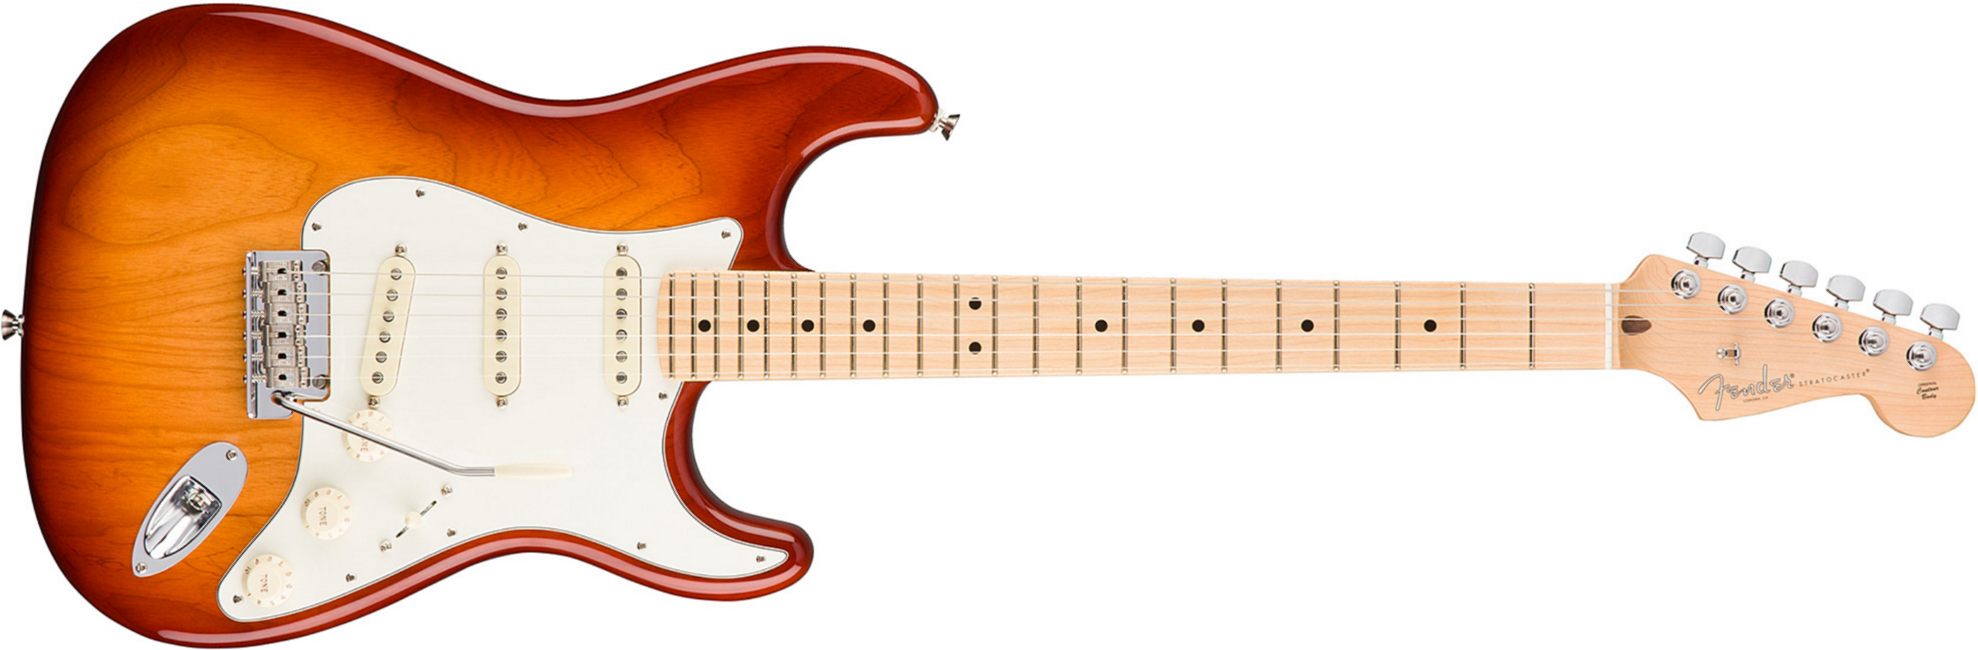 Fender Strat American Professional 2017 3s Usa Mn - Sienna Sunburst - Str shape electric guitar - Main picture